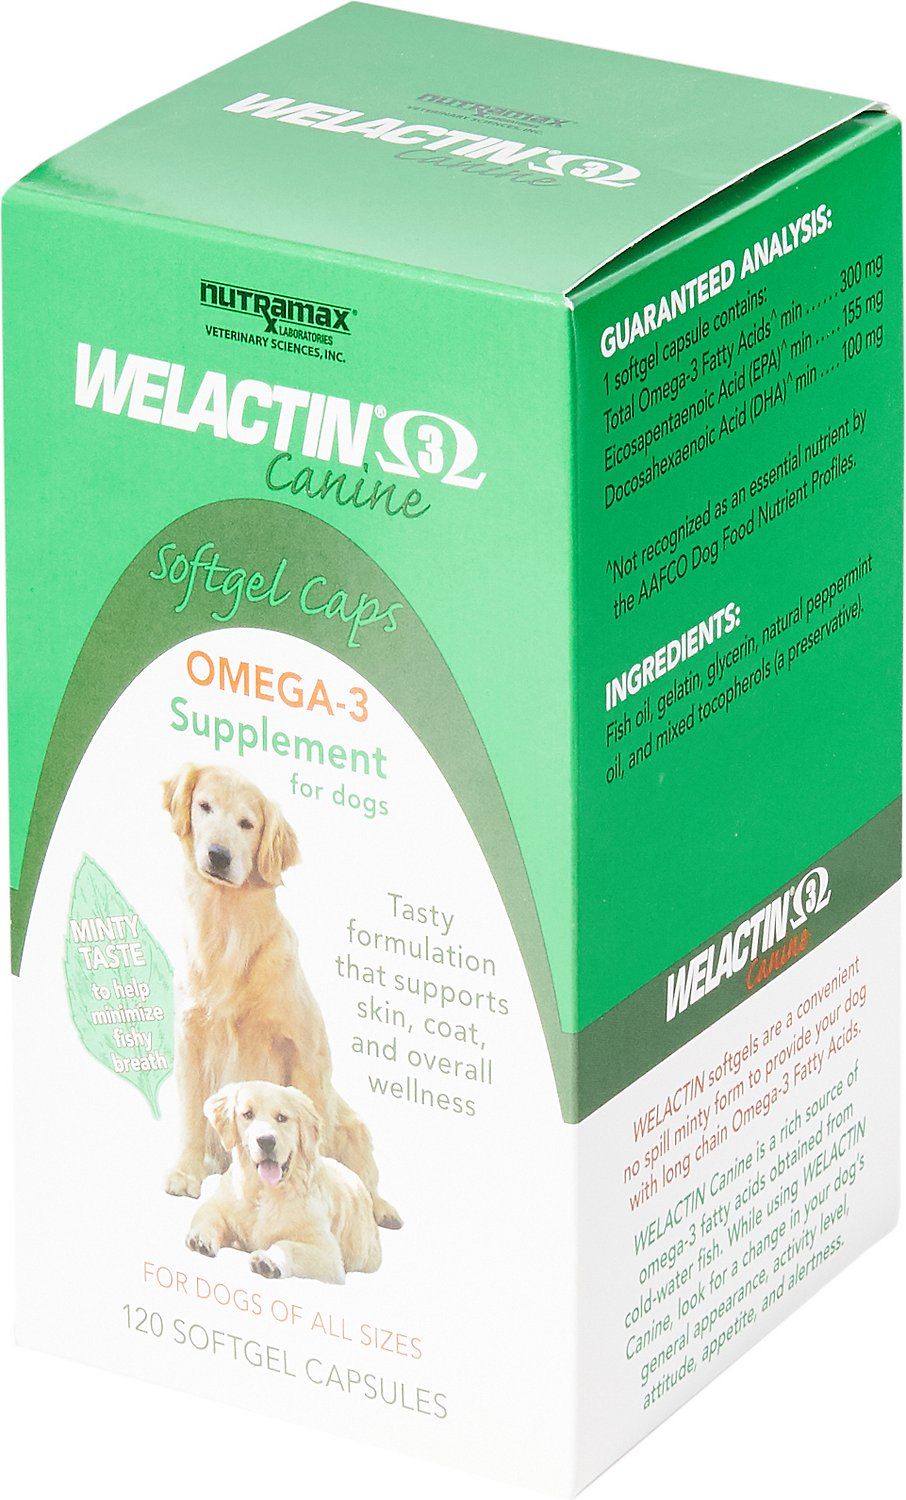 Nutramax Welactin Canine Omega